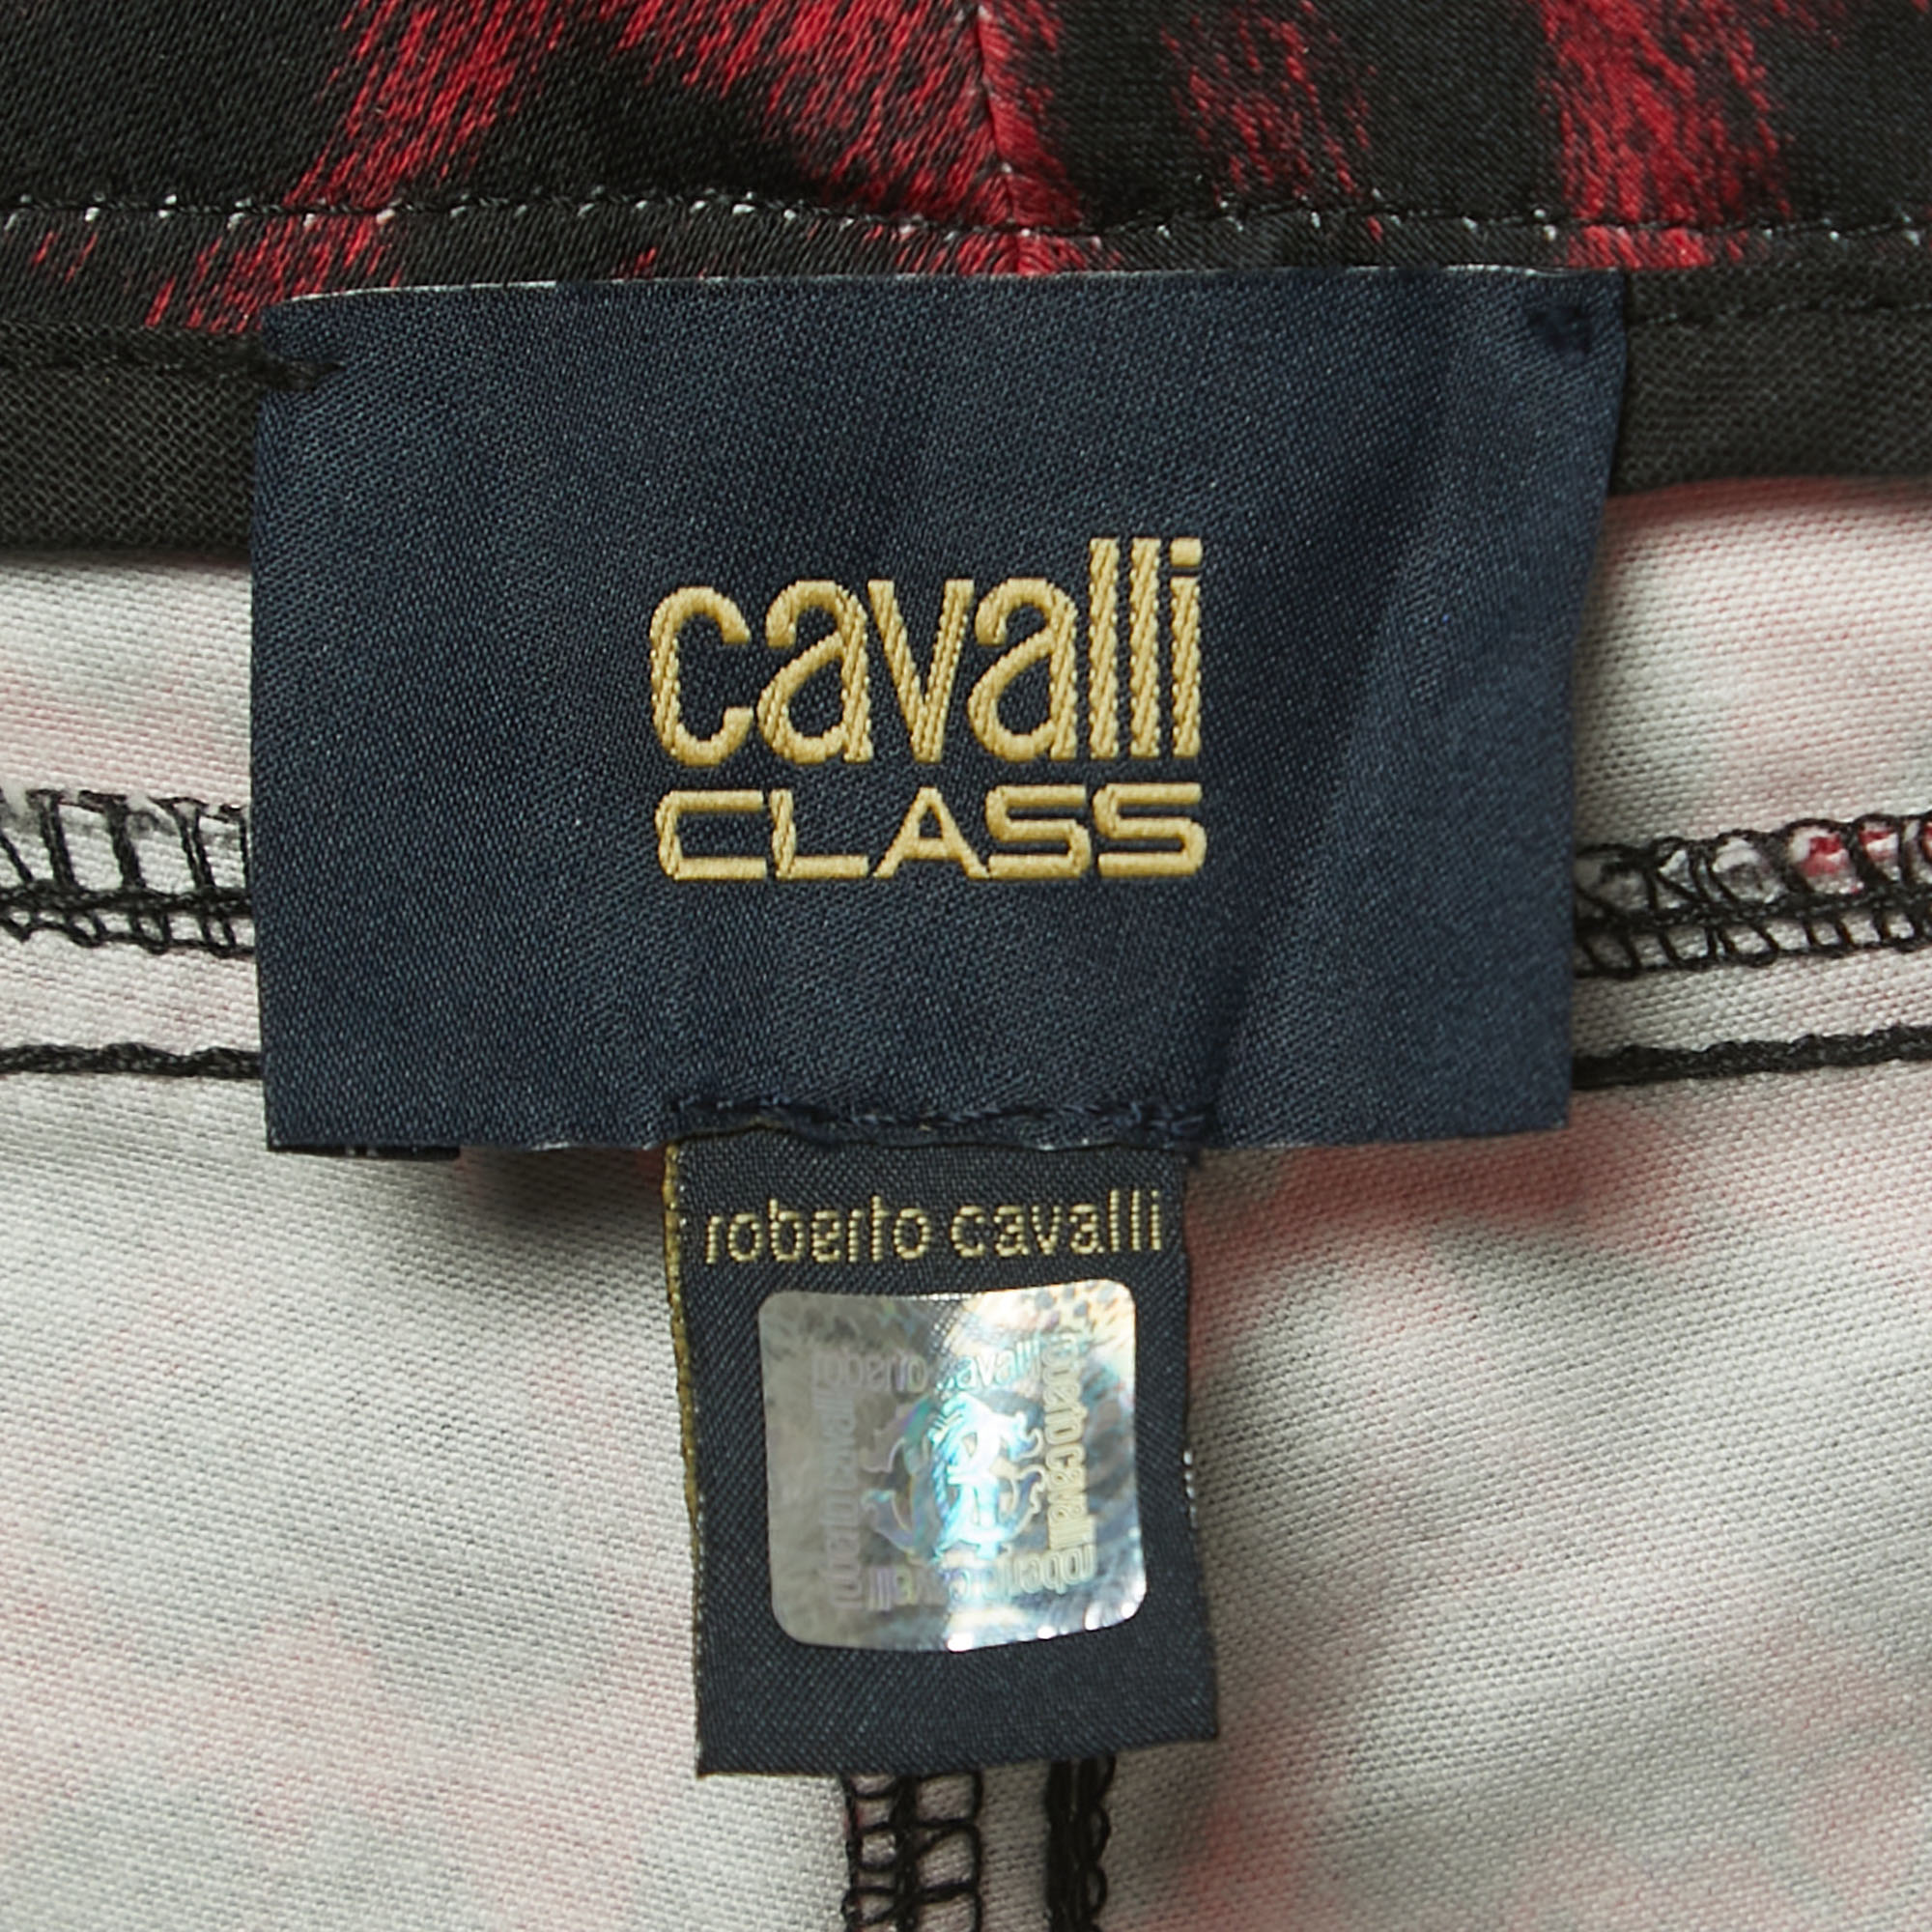 Class Roberto Cavalli Red Animal Print Denim Jeans L Waist 32